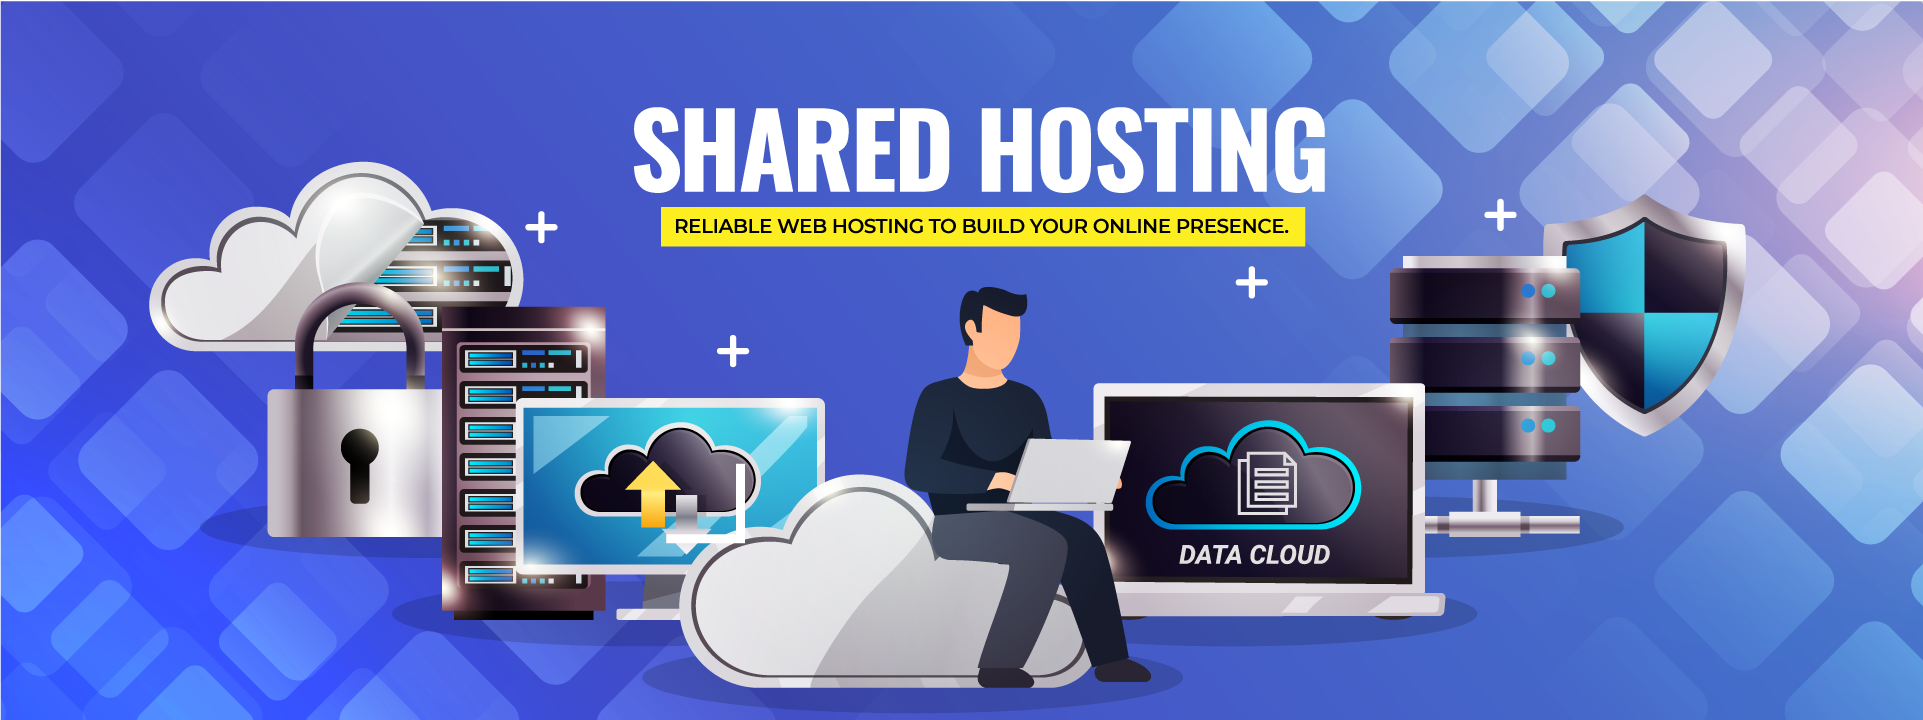 Buy Best Shared Web Hosting Check Out Best Shared Web Hosting Plans